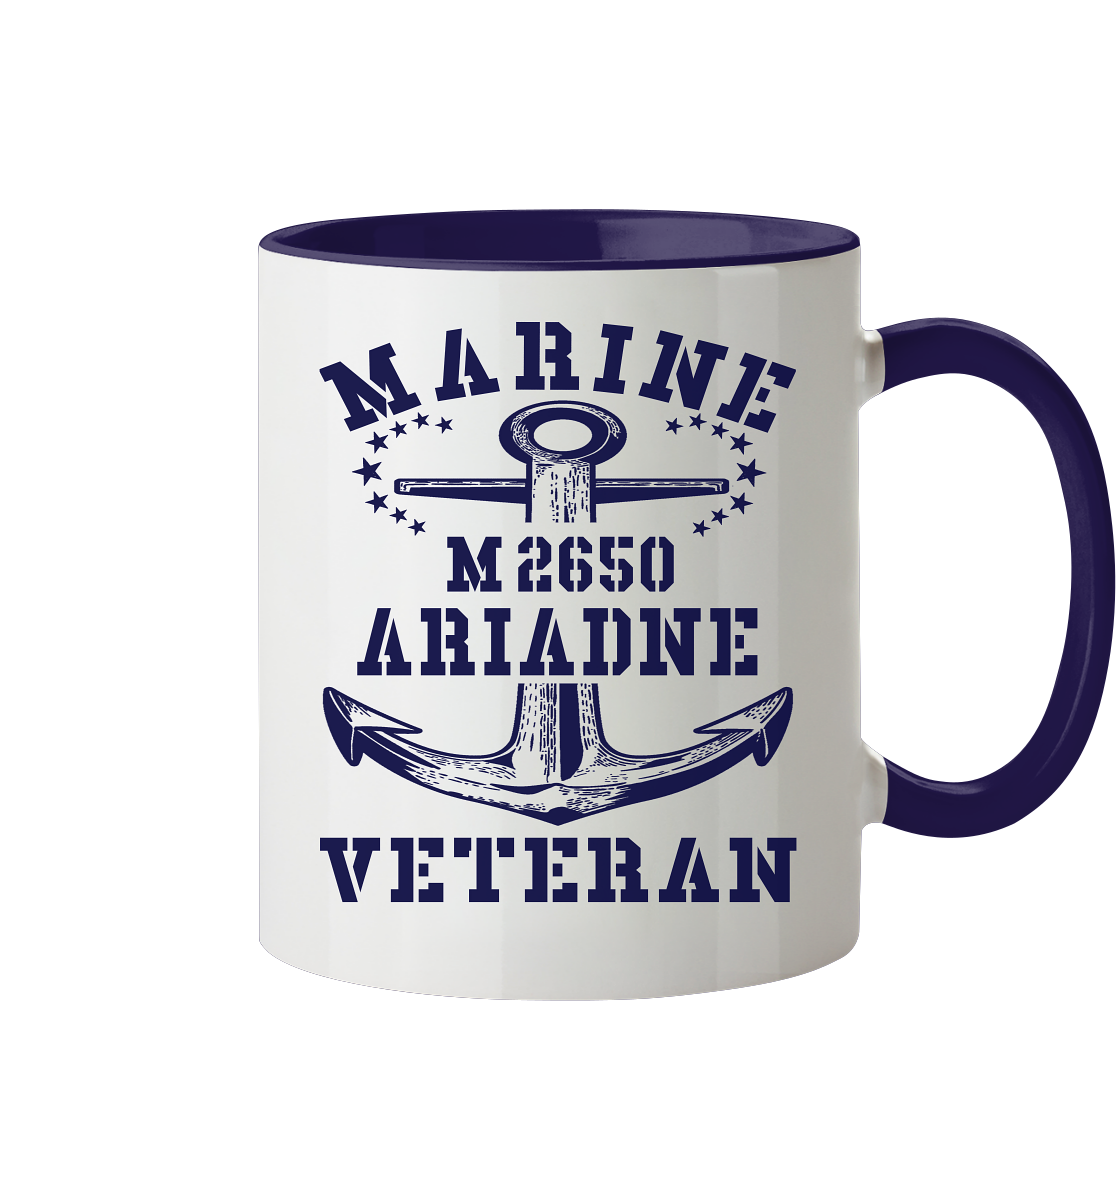 BiMi M2650 ARIADNE Marine Veteran - Tasse zweifarbig